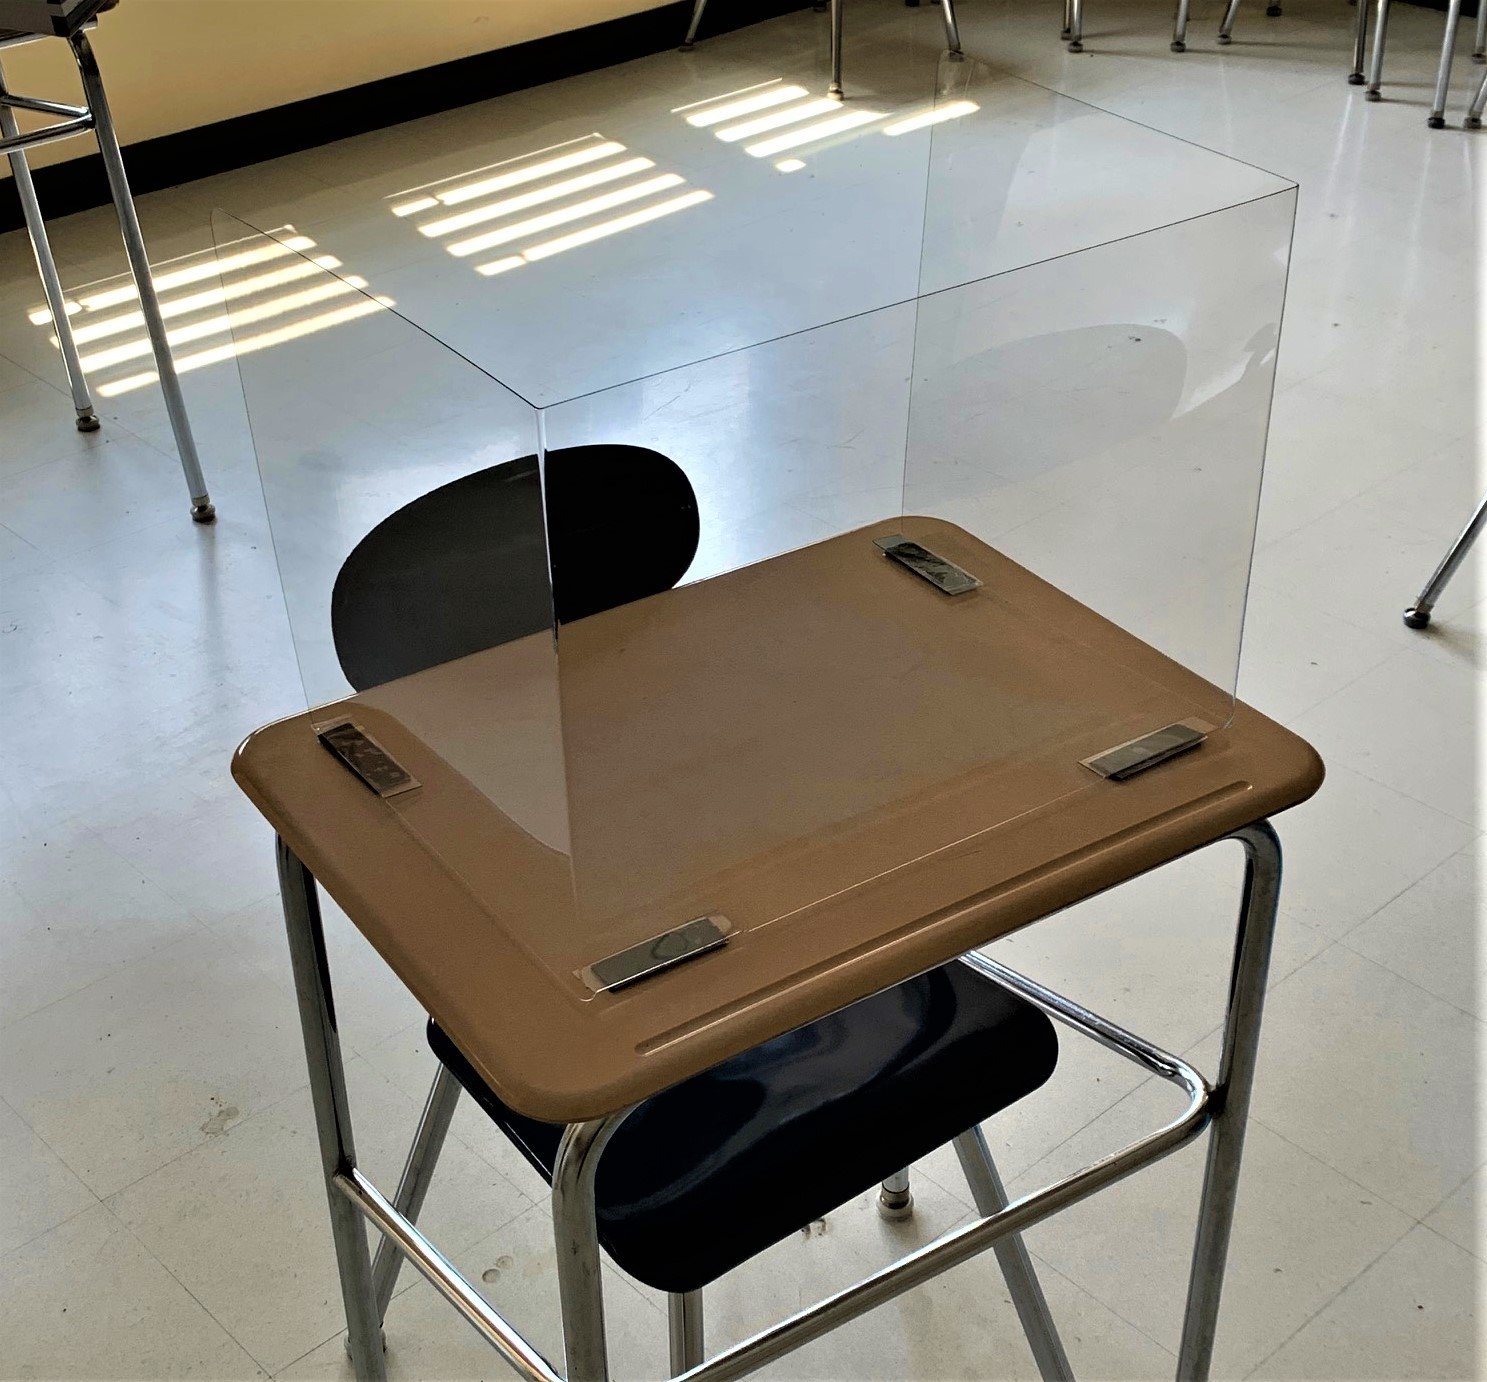 (Desktop Shields for Students - .040 PETG - NY) Desktop Shields for Students - Semi-Rigid PETG